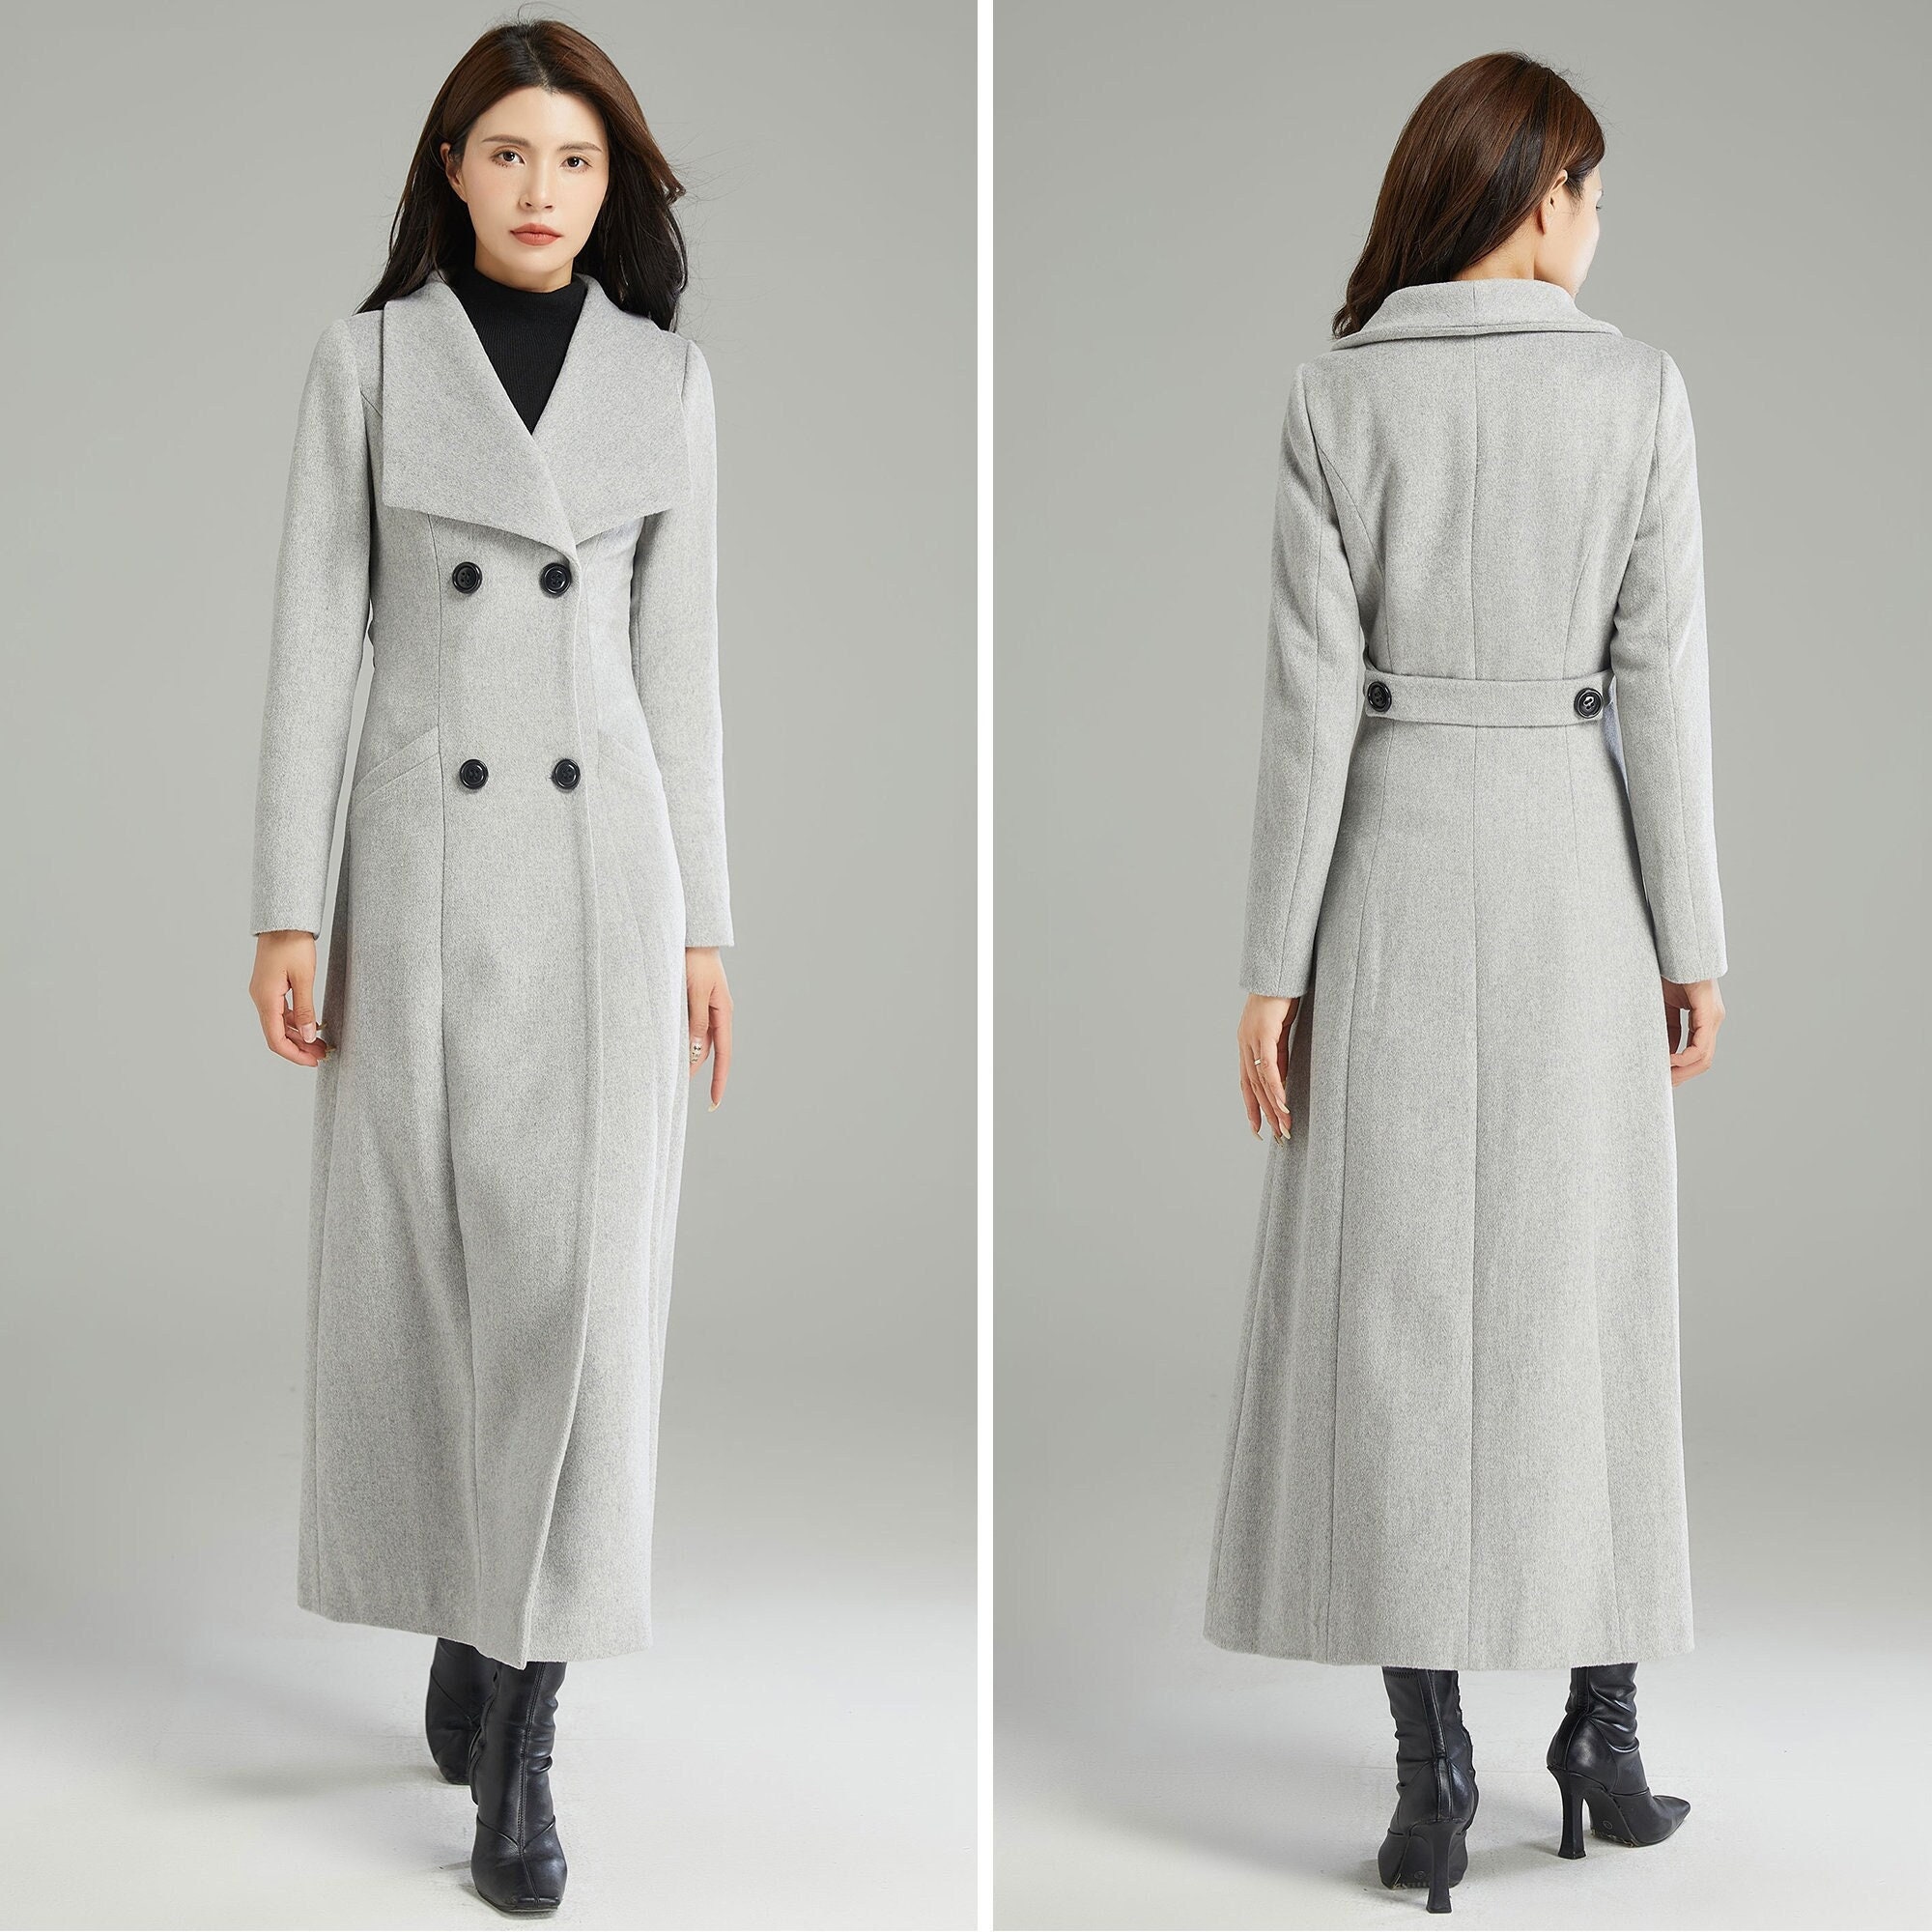 Wool Coat, Black Coat, Swing Coat, Long Coat, Long Coat Dress, Winter Coat  Women, Princess Coat, Fall Coat Women, Coat With Pockets C1019 -   Sweden